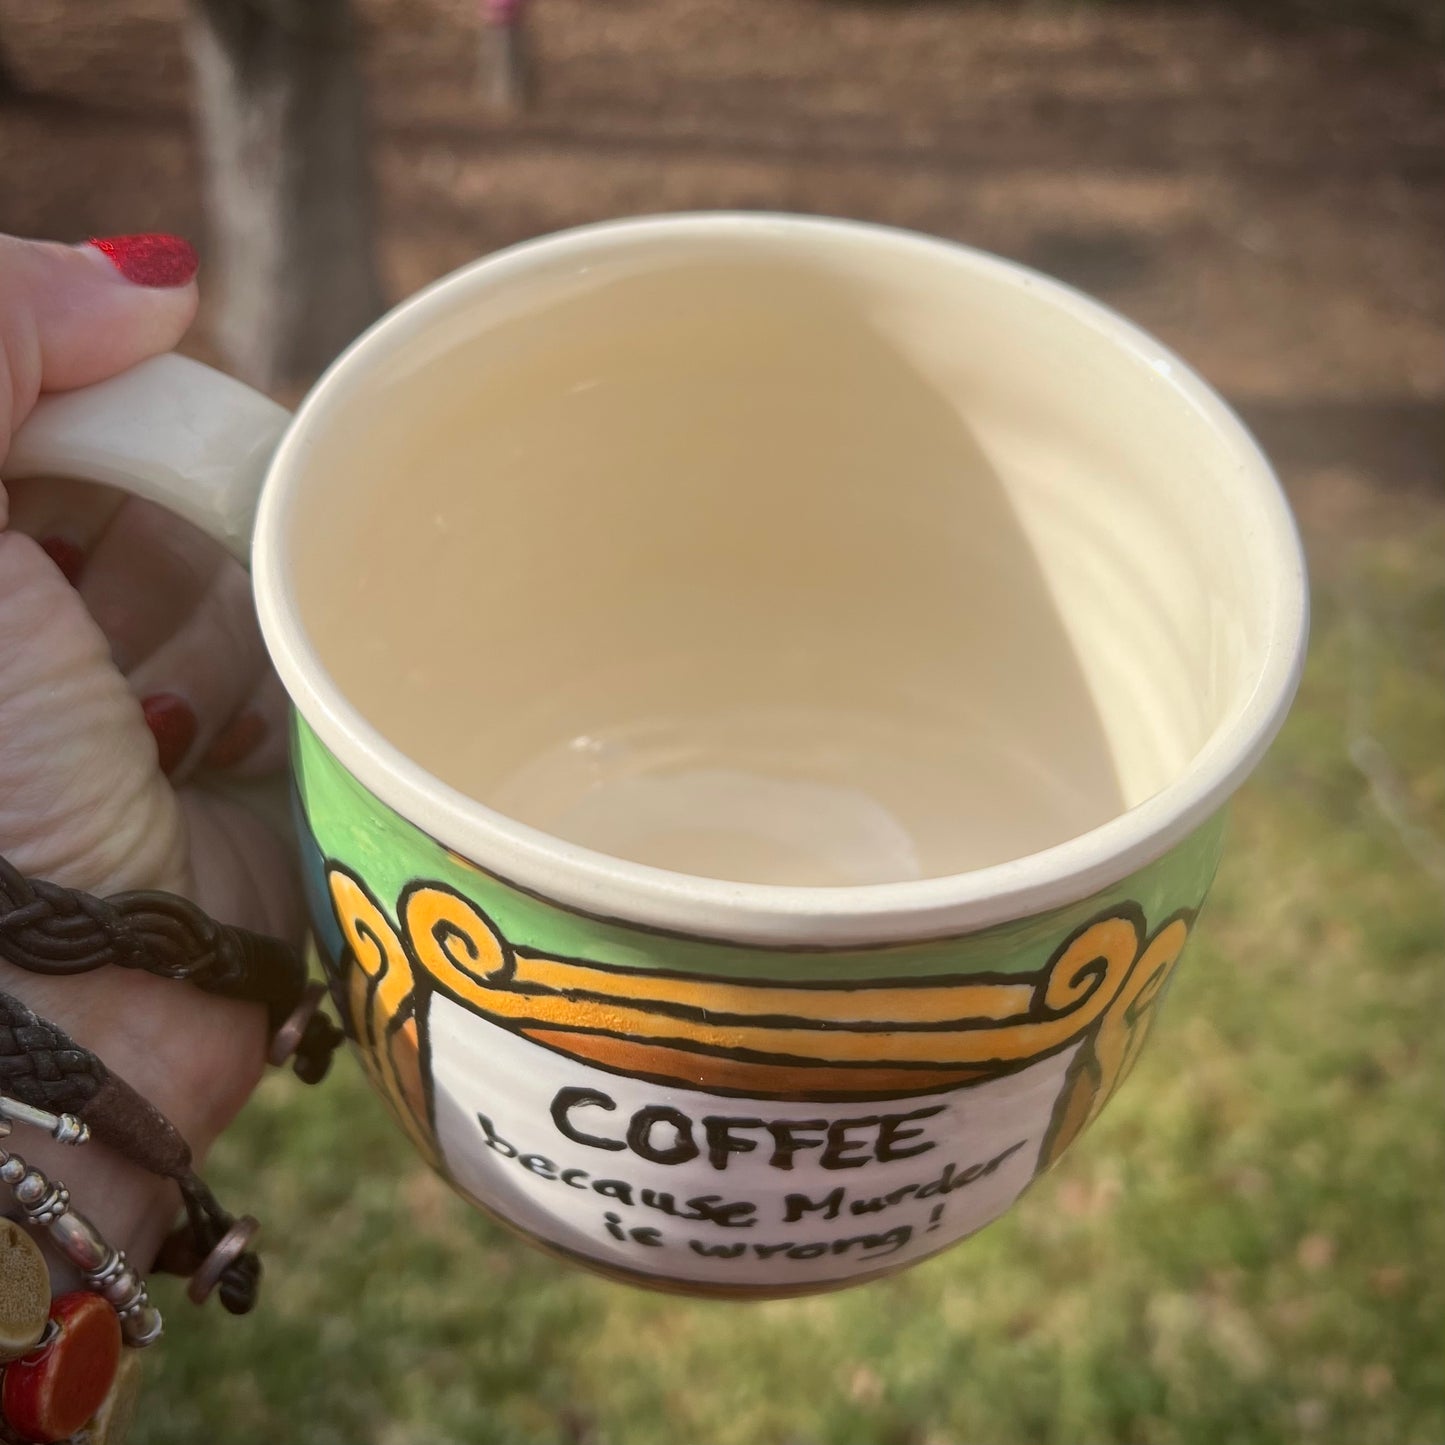 Coffee because Murder is Wrong XL Ceramic Mug